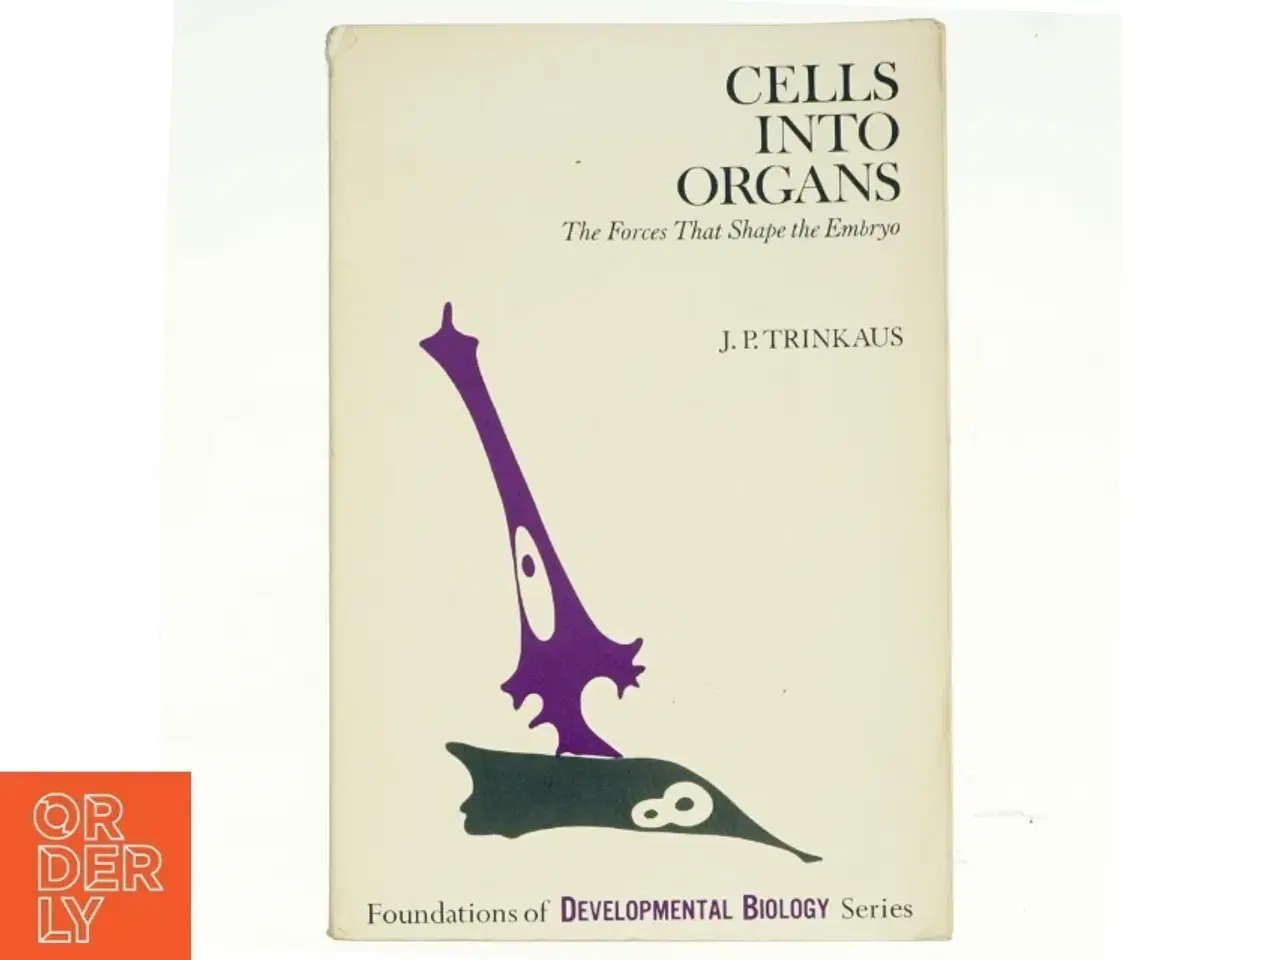 Billede 1 - Cells into organs, The Forces that Shape the Embryo, af J.P.Trinkaus